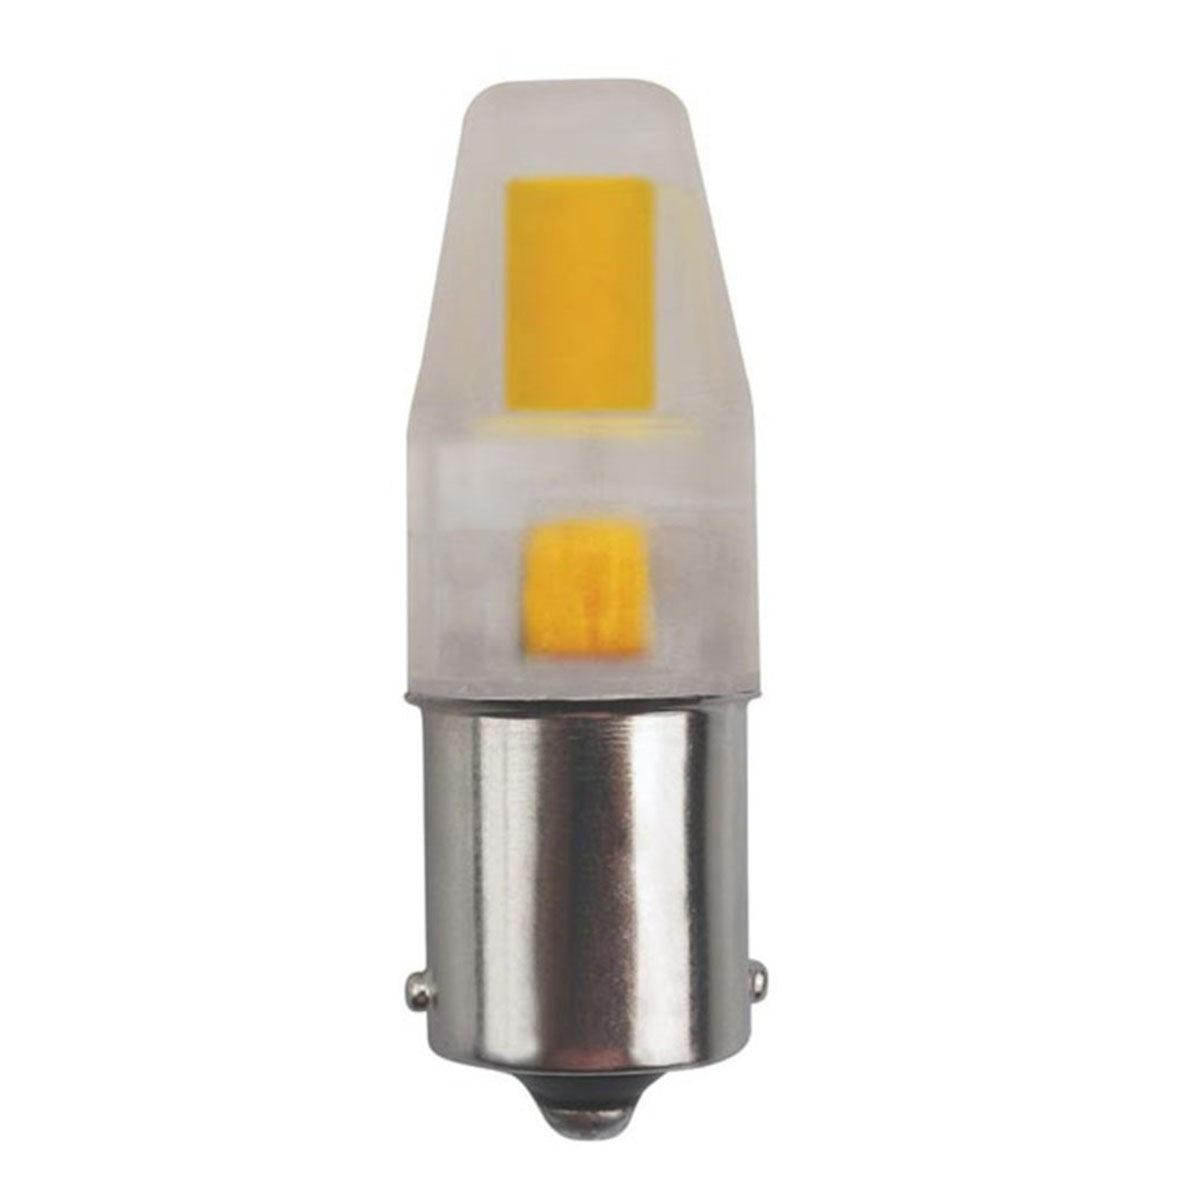 T4 Mini LED Bulb, 3 Watt, 330 Lumens, 5000K, BA15s Single Bayonet Base, Frosted Finish